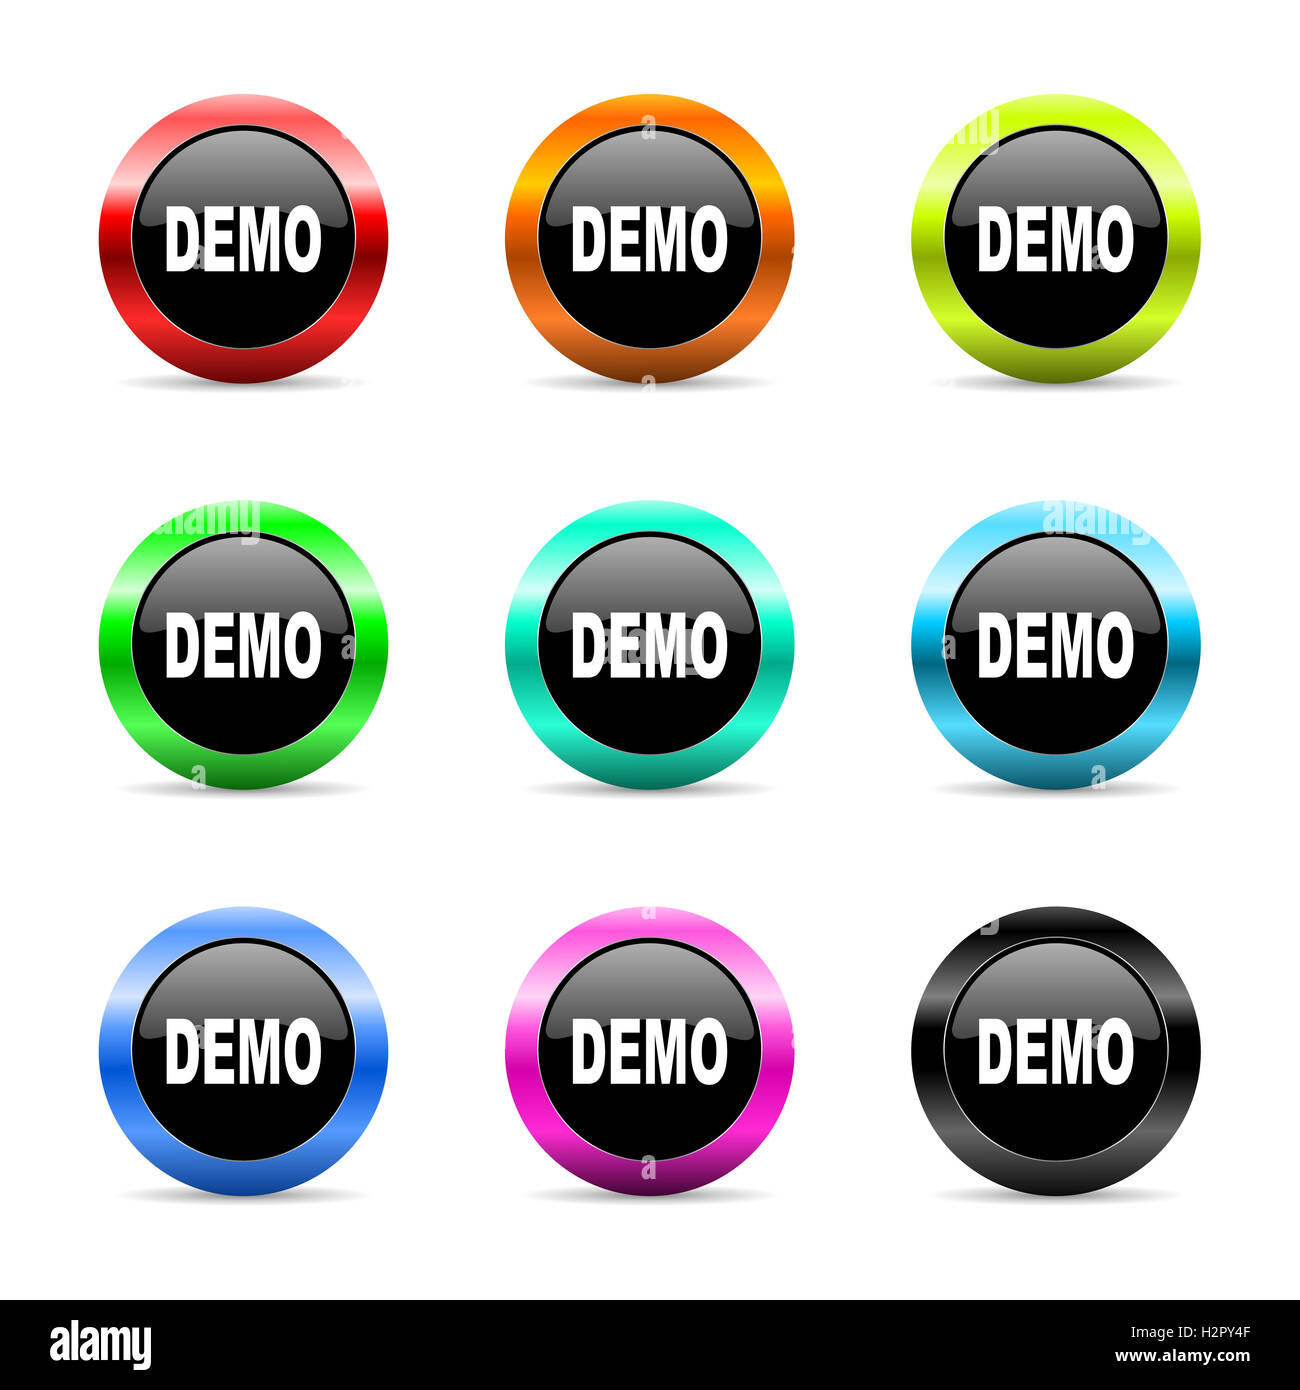 demo web icons set Stock Photo